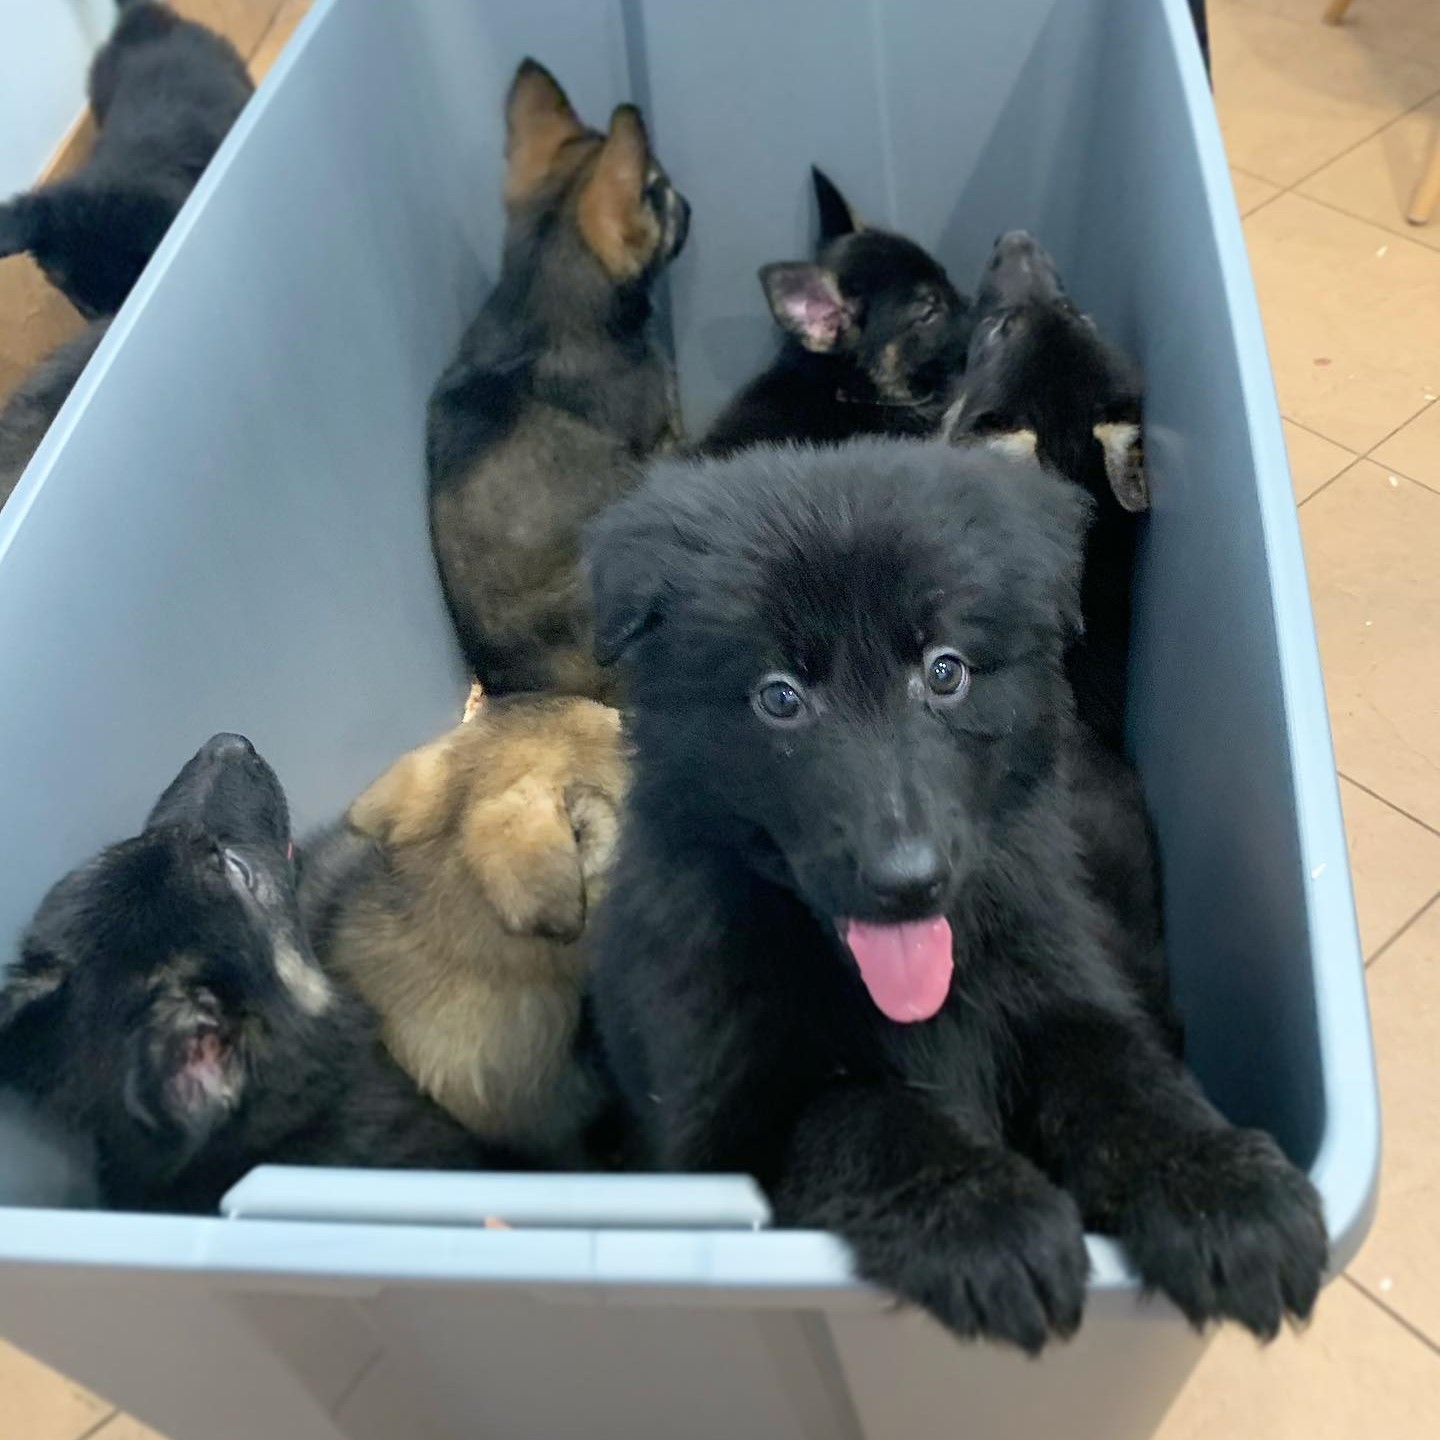 Plastic Bin Full of Puppies